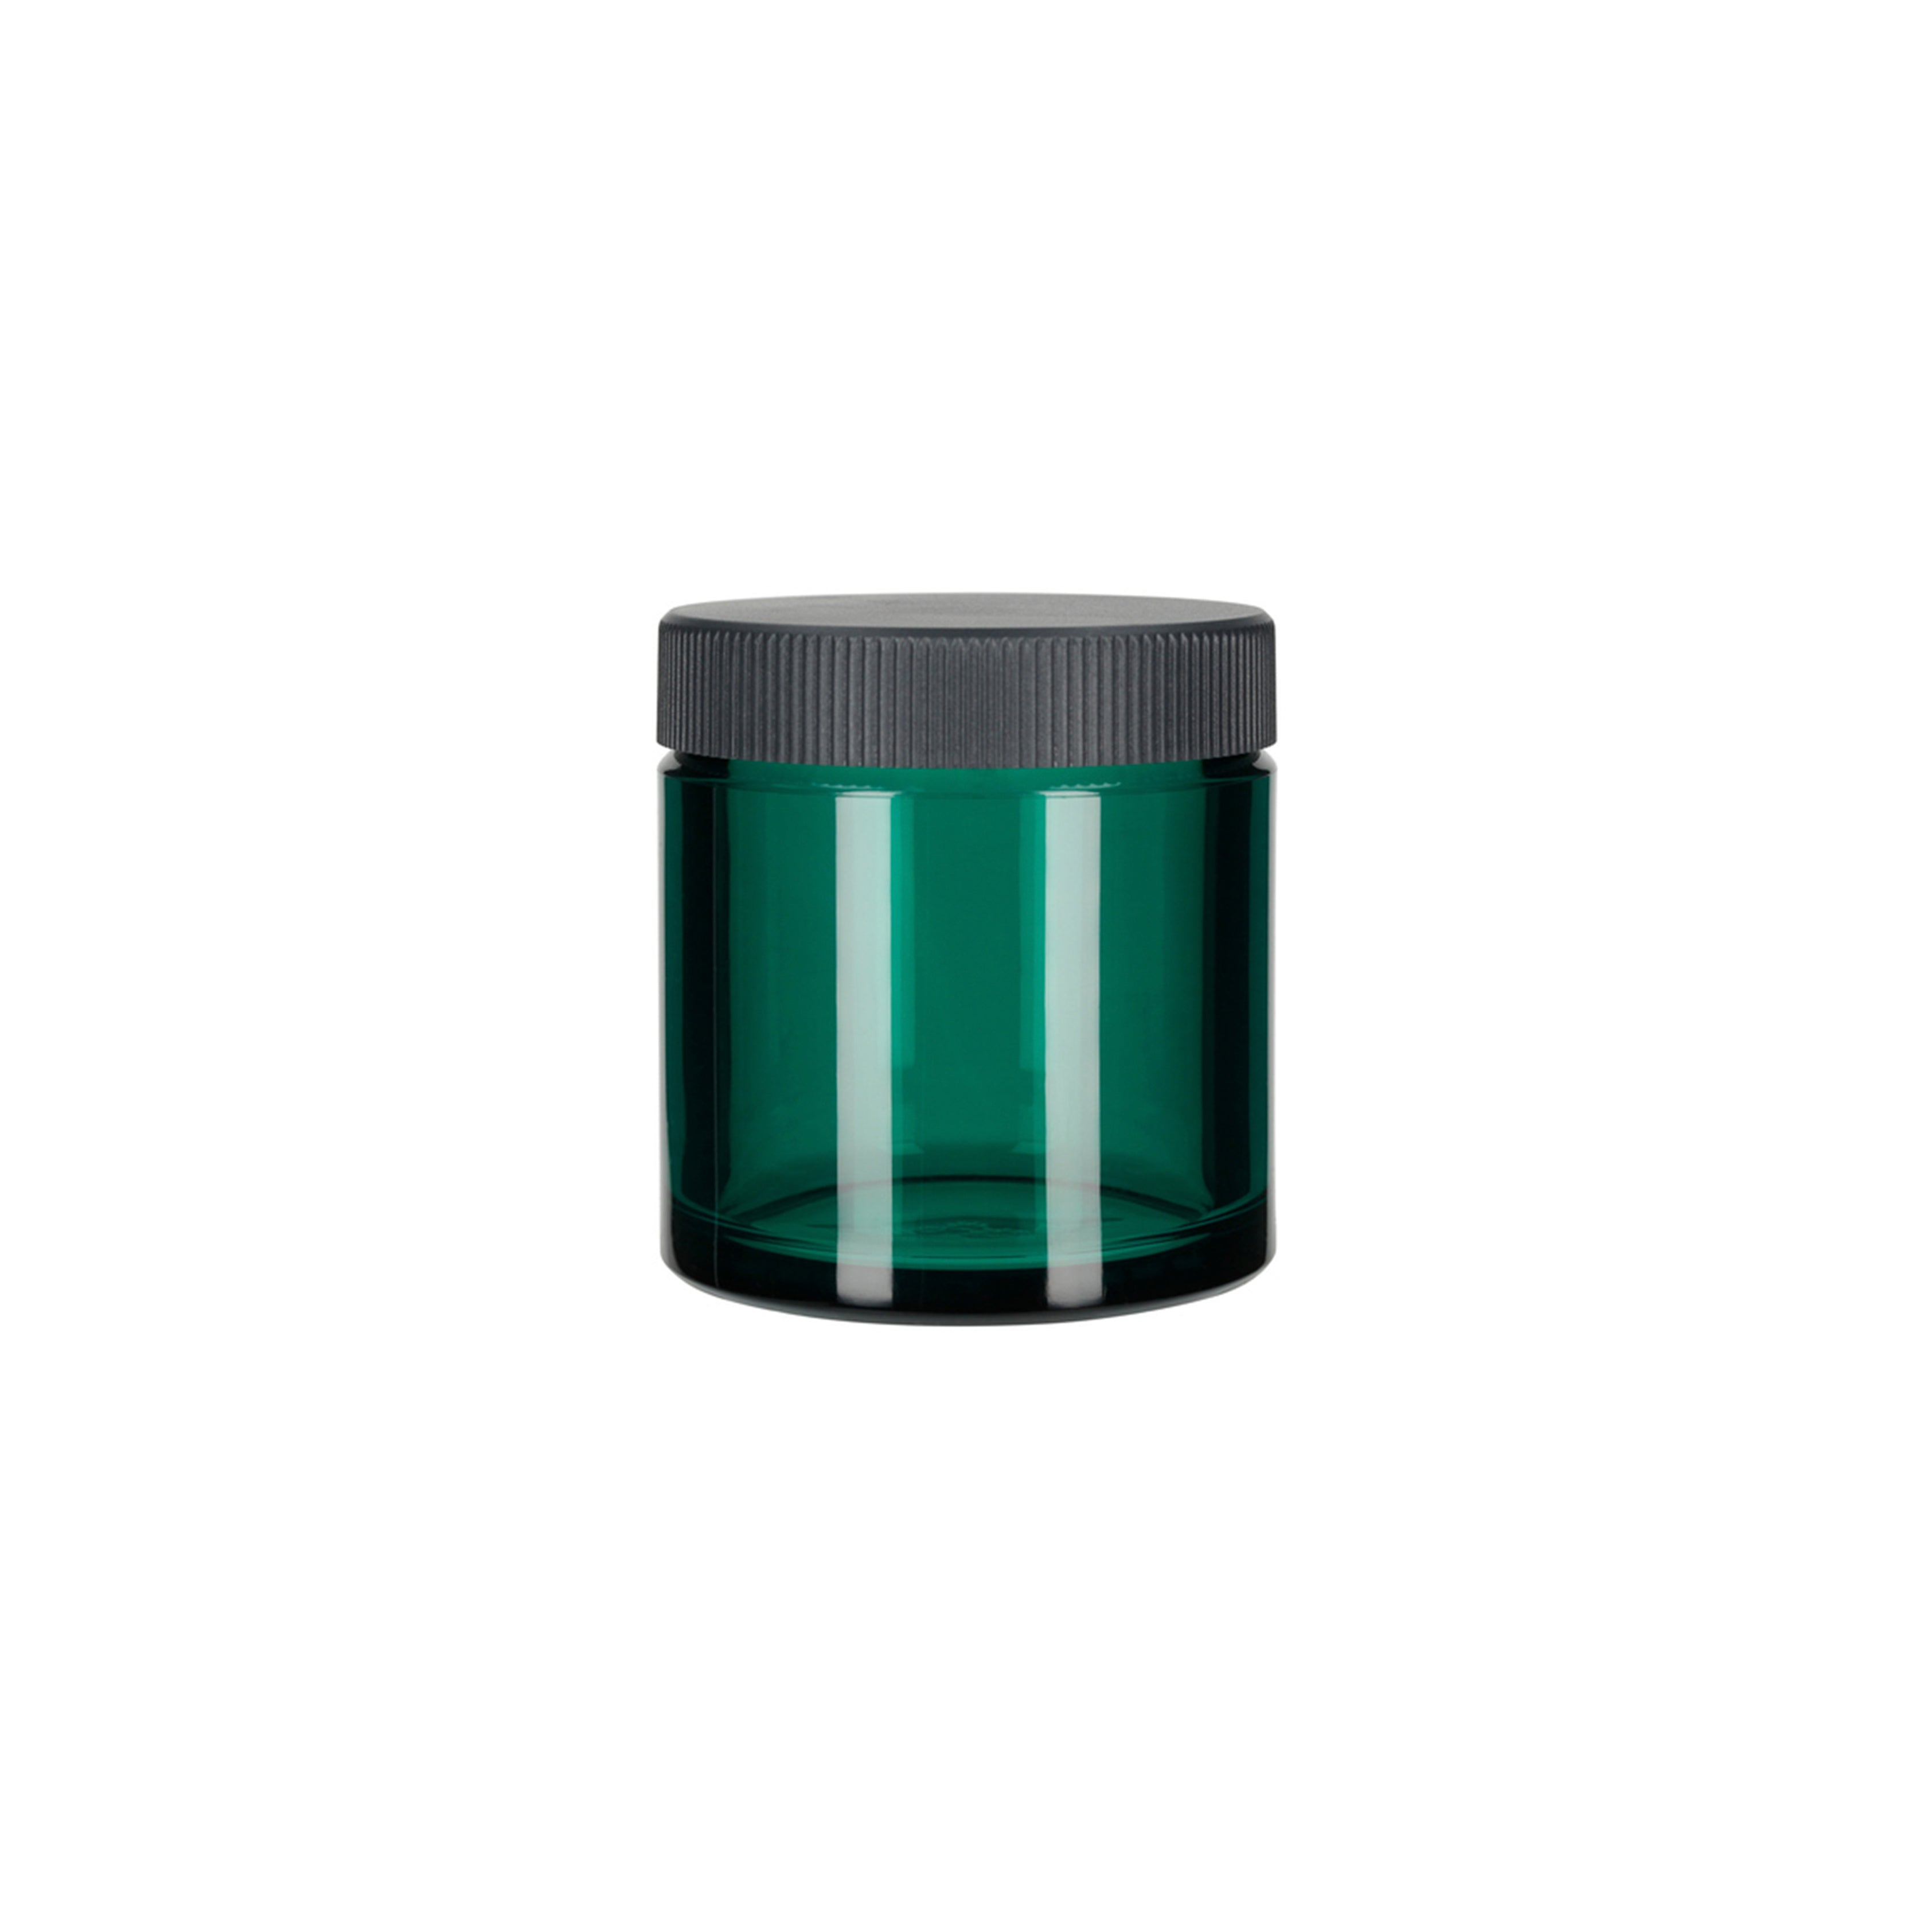 Comandante Polymer Bean Jar & Lid - Green